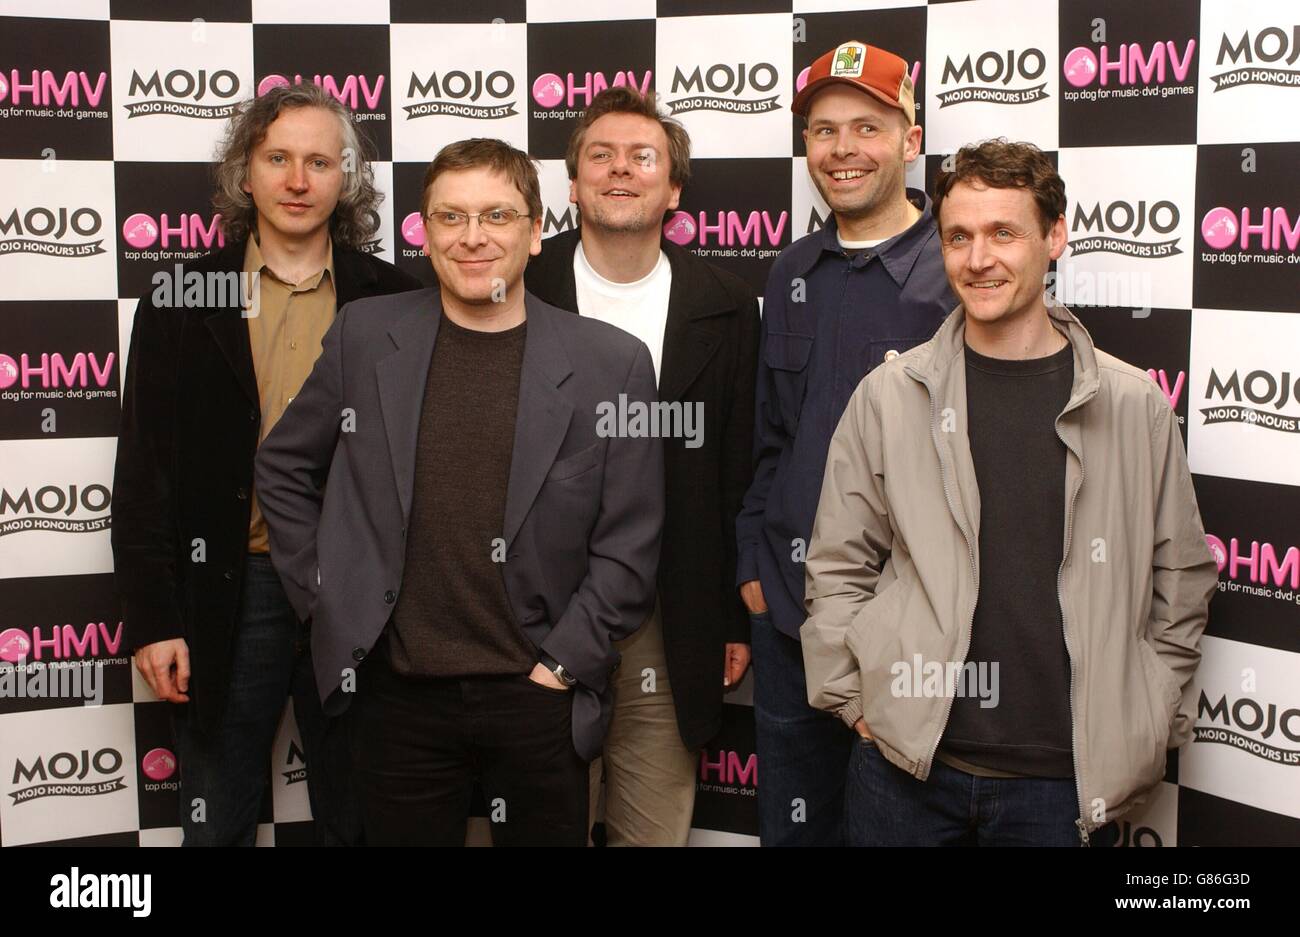 Mojo Honors List Launch Party - HMV Oxford Street. Teenage Fan Club Pose für Fotos. Stockfoto